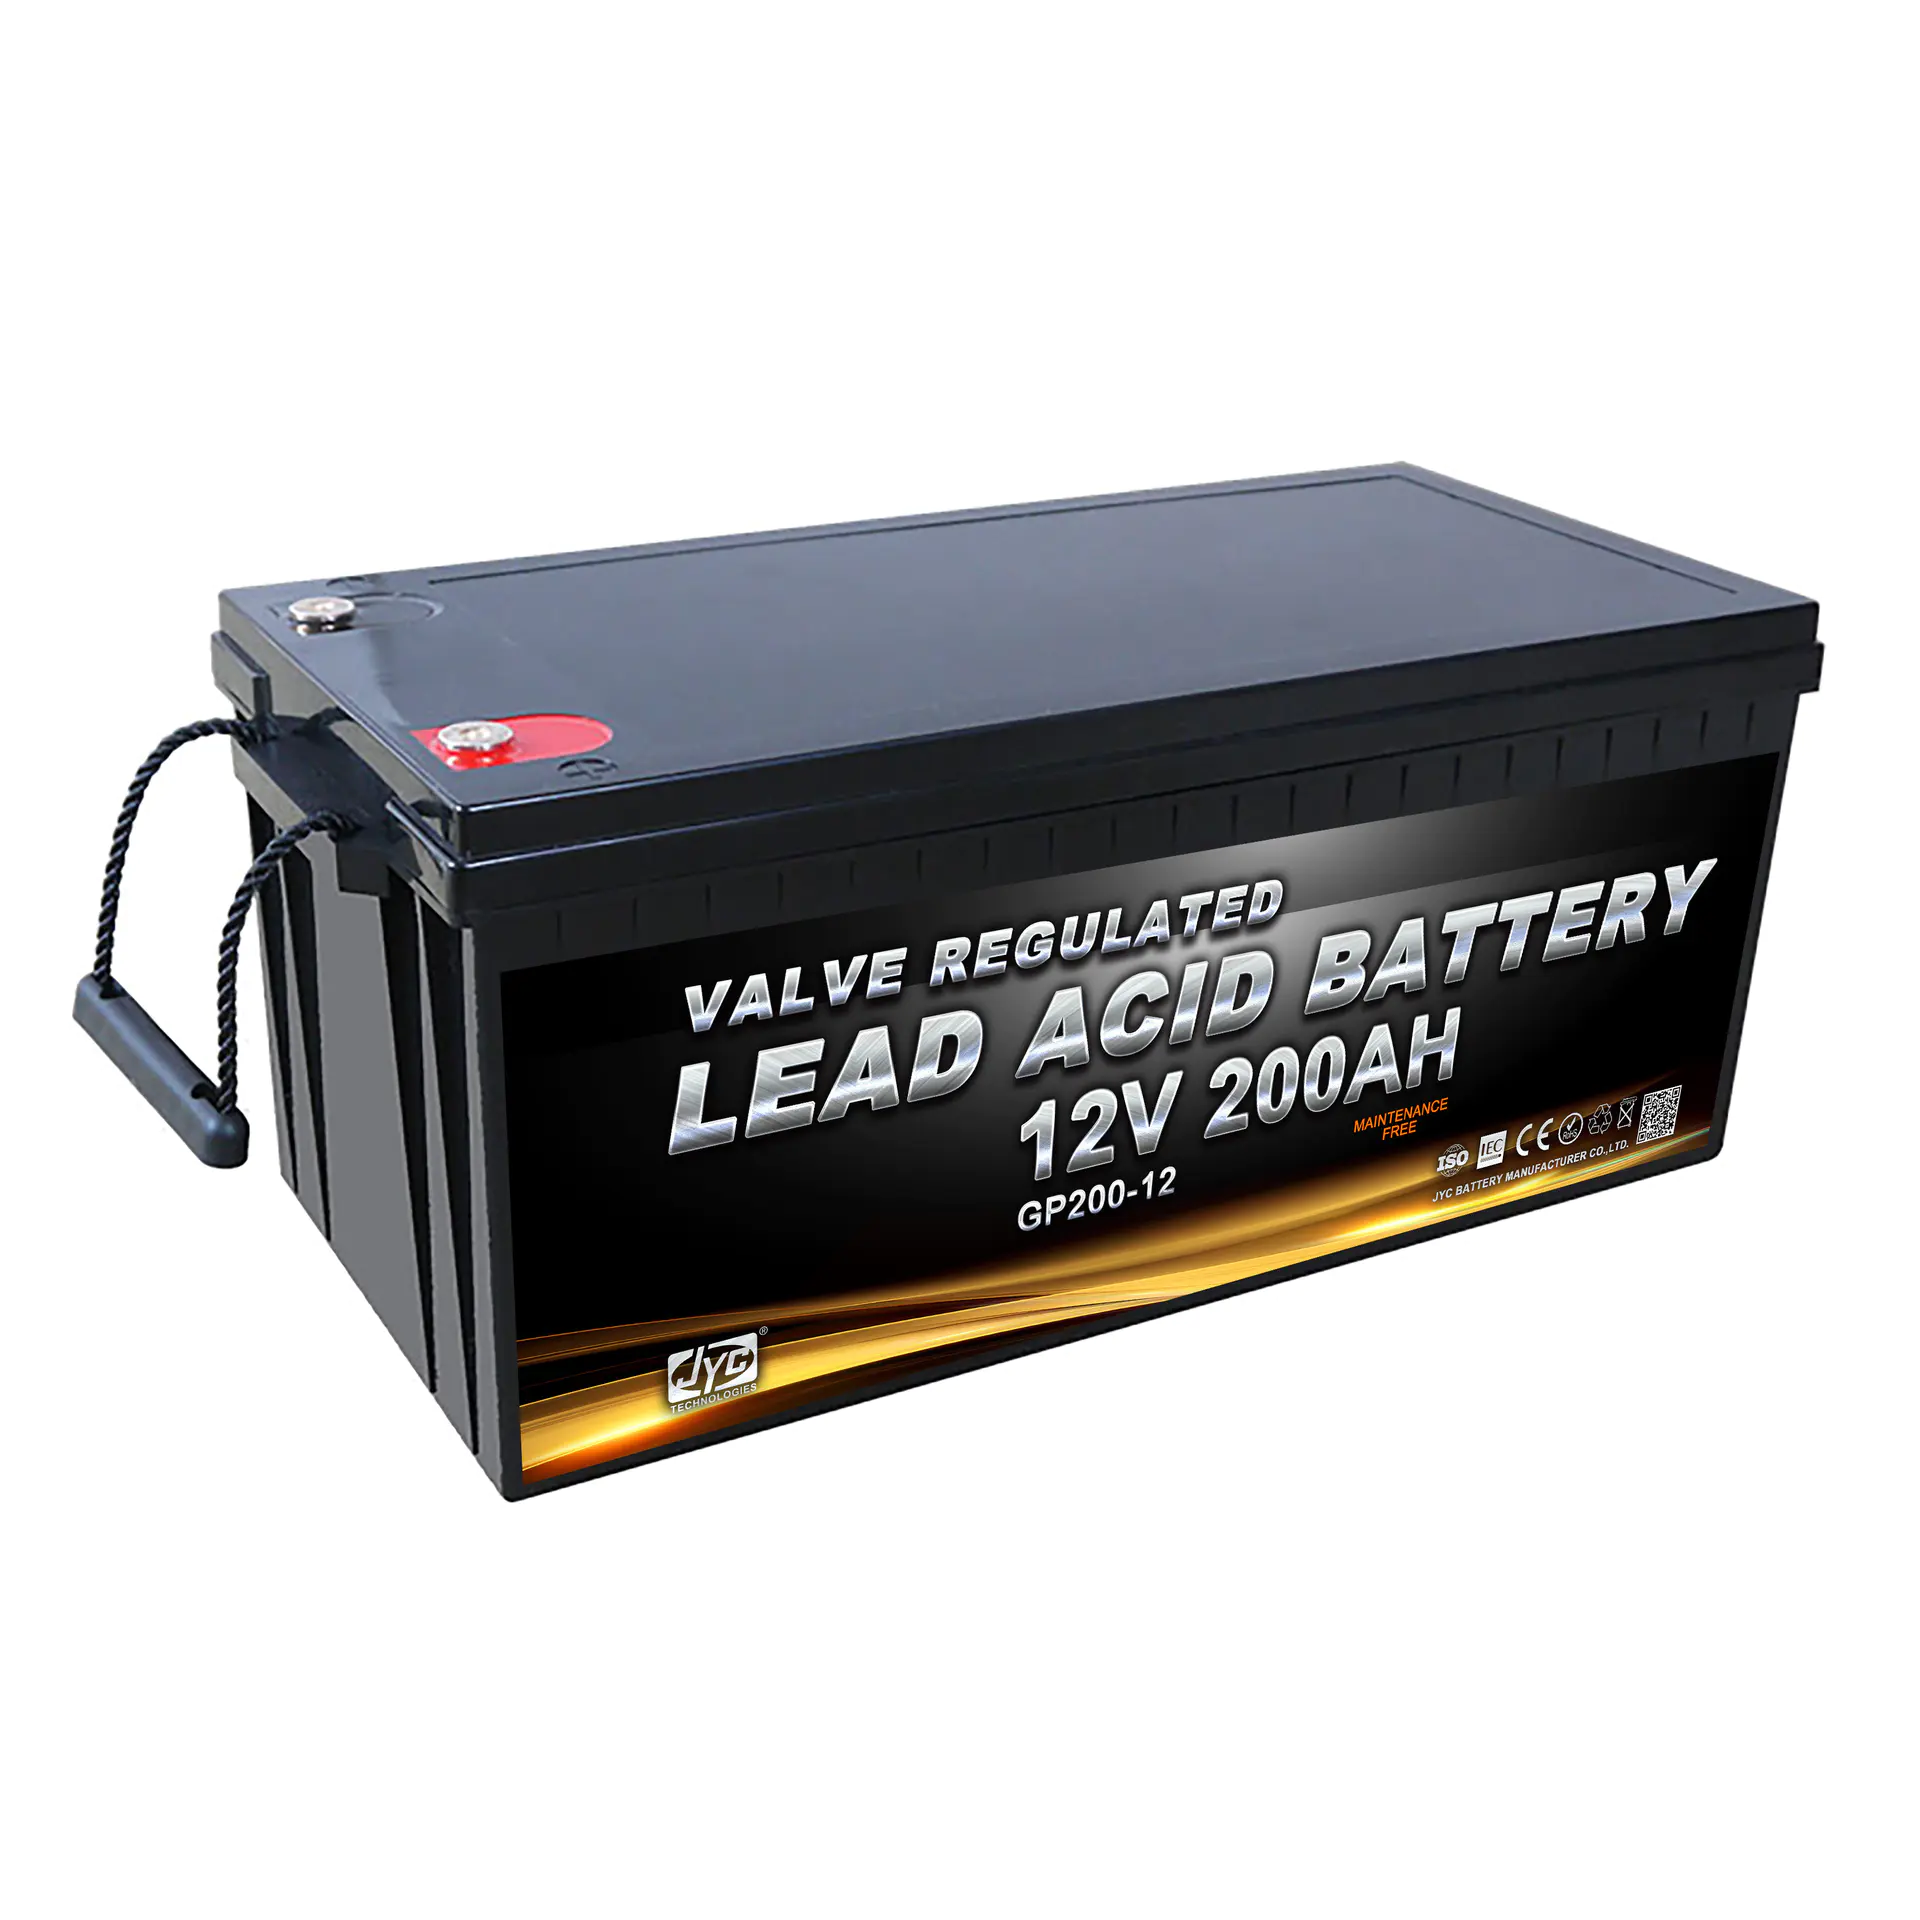 Green saver energy storage 24v 200ah lead acid battery